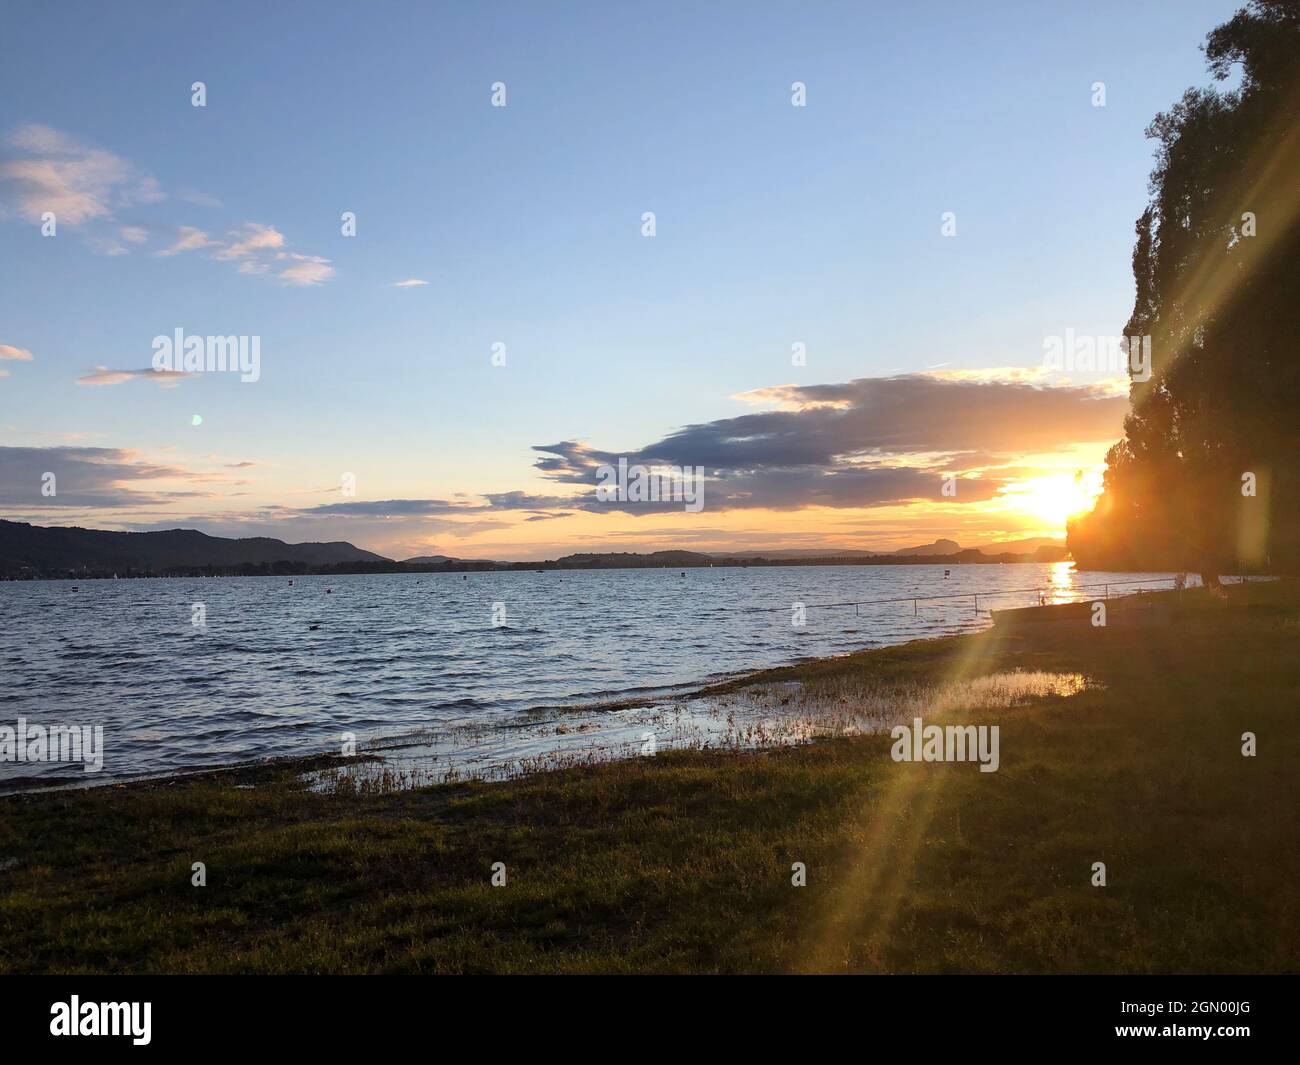 Sonnenuntergang auf der Mettnau a Radolfzell am Bodensee lago di costanza Foto Stock